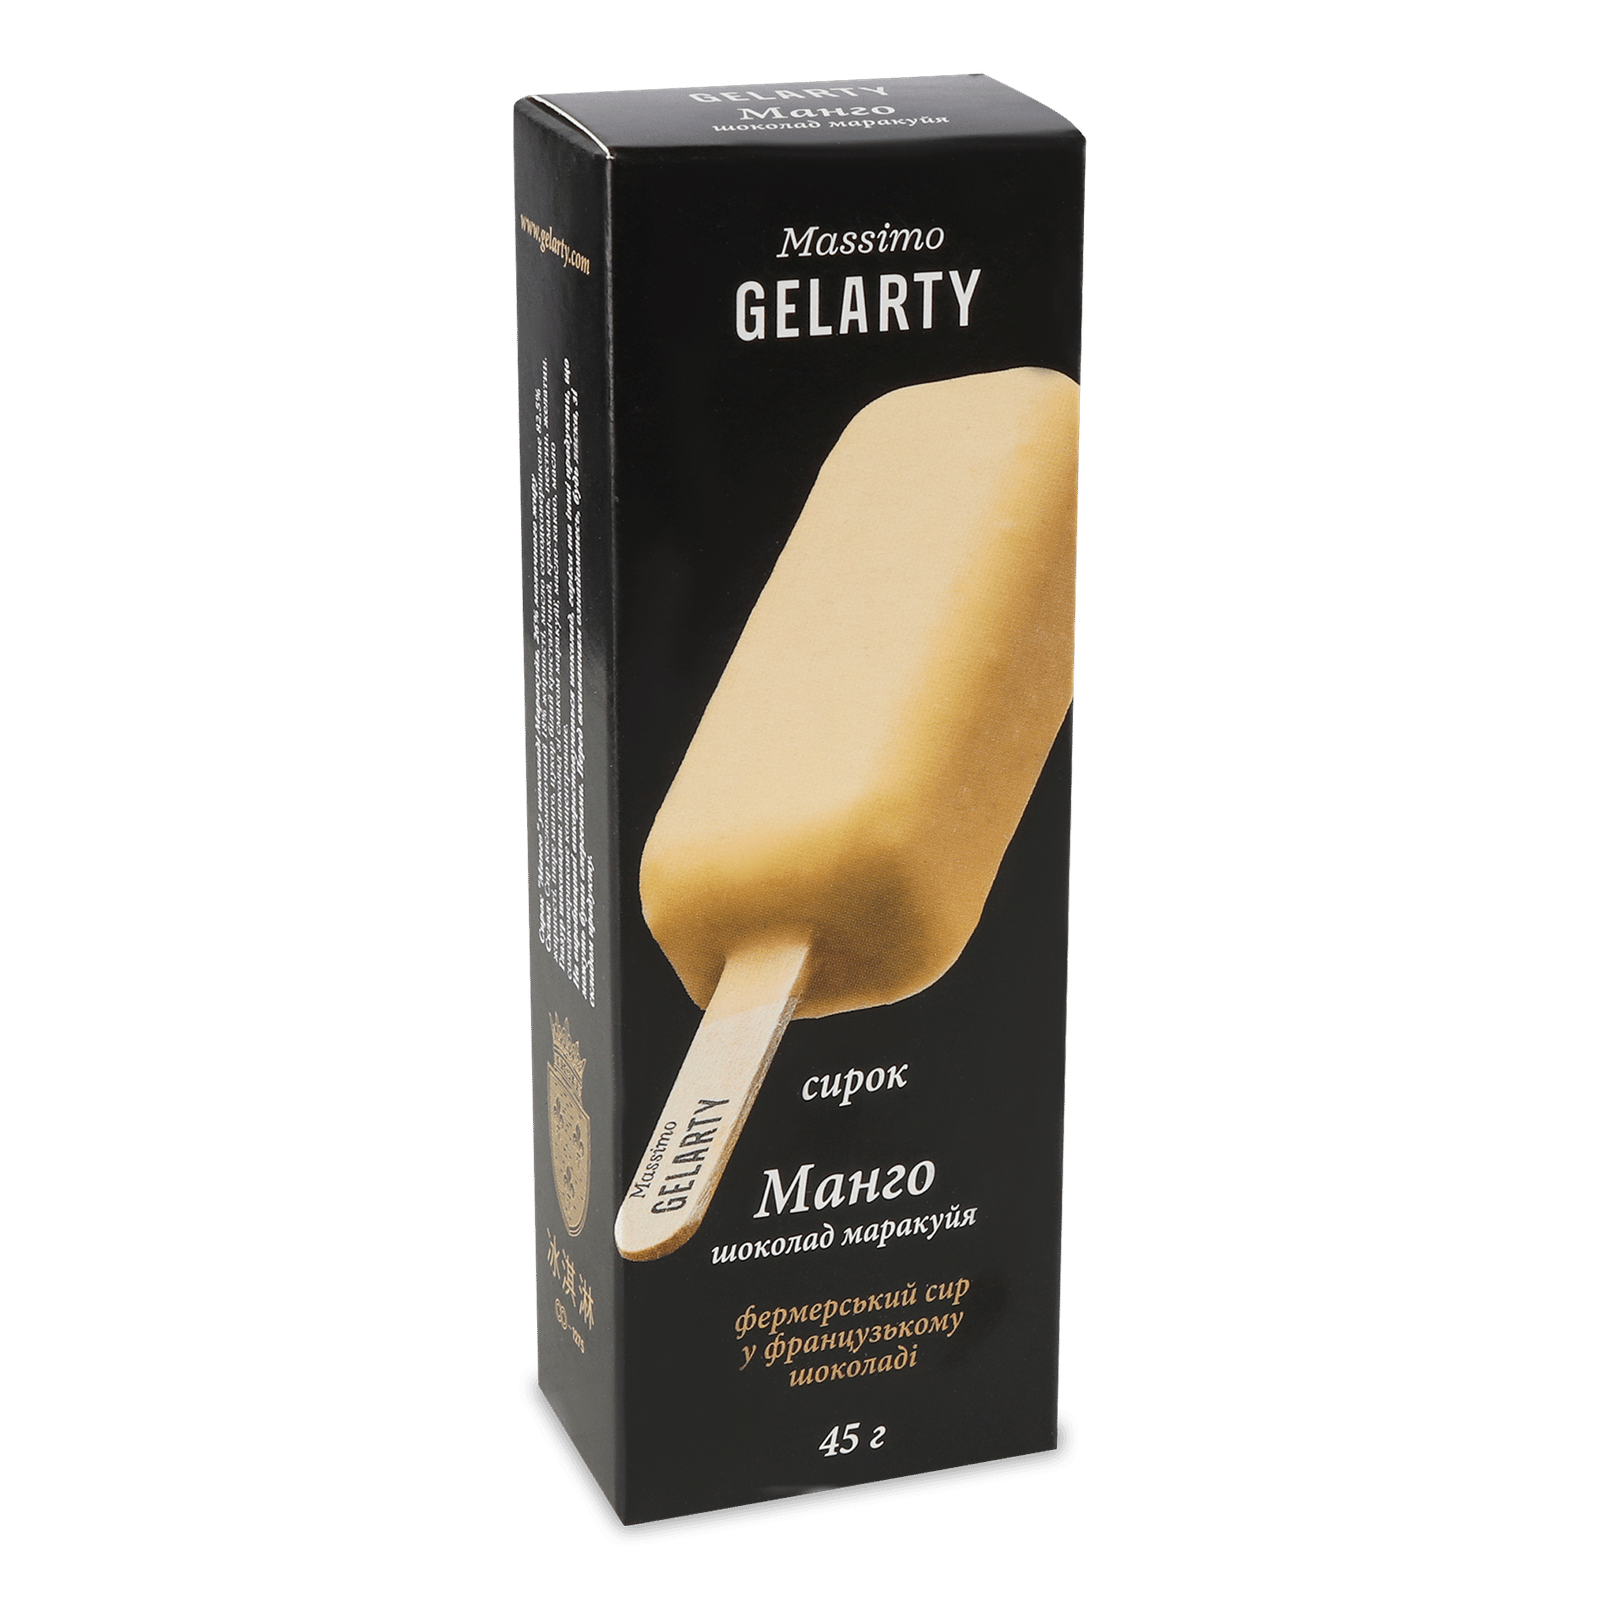 Сирок Gelarty Massimo маракуйя-шоколад 26% - 1